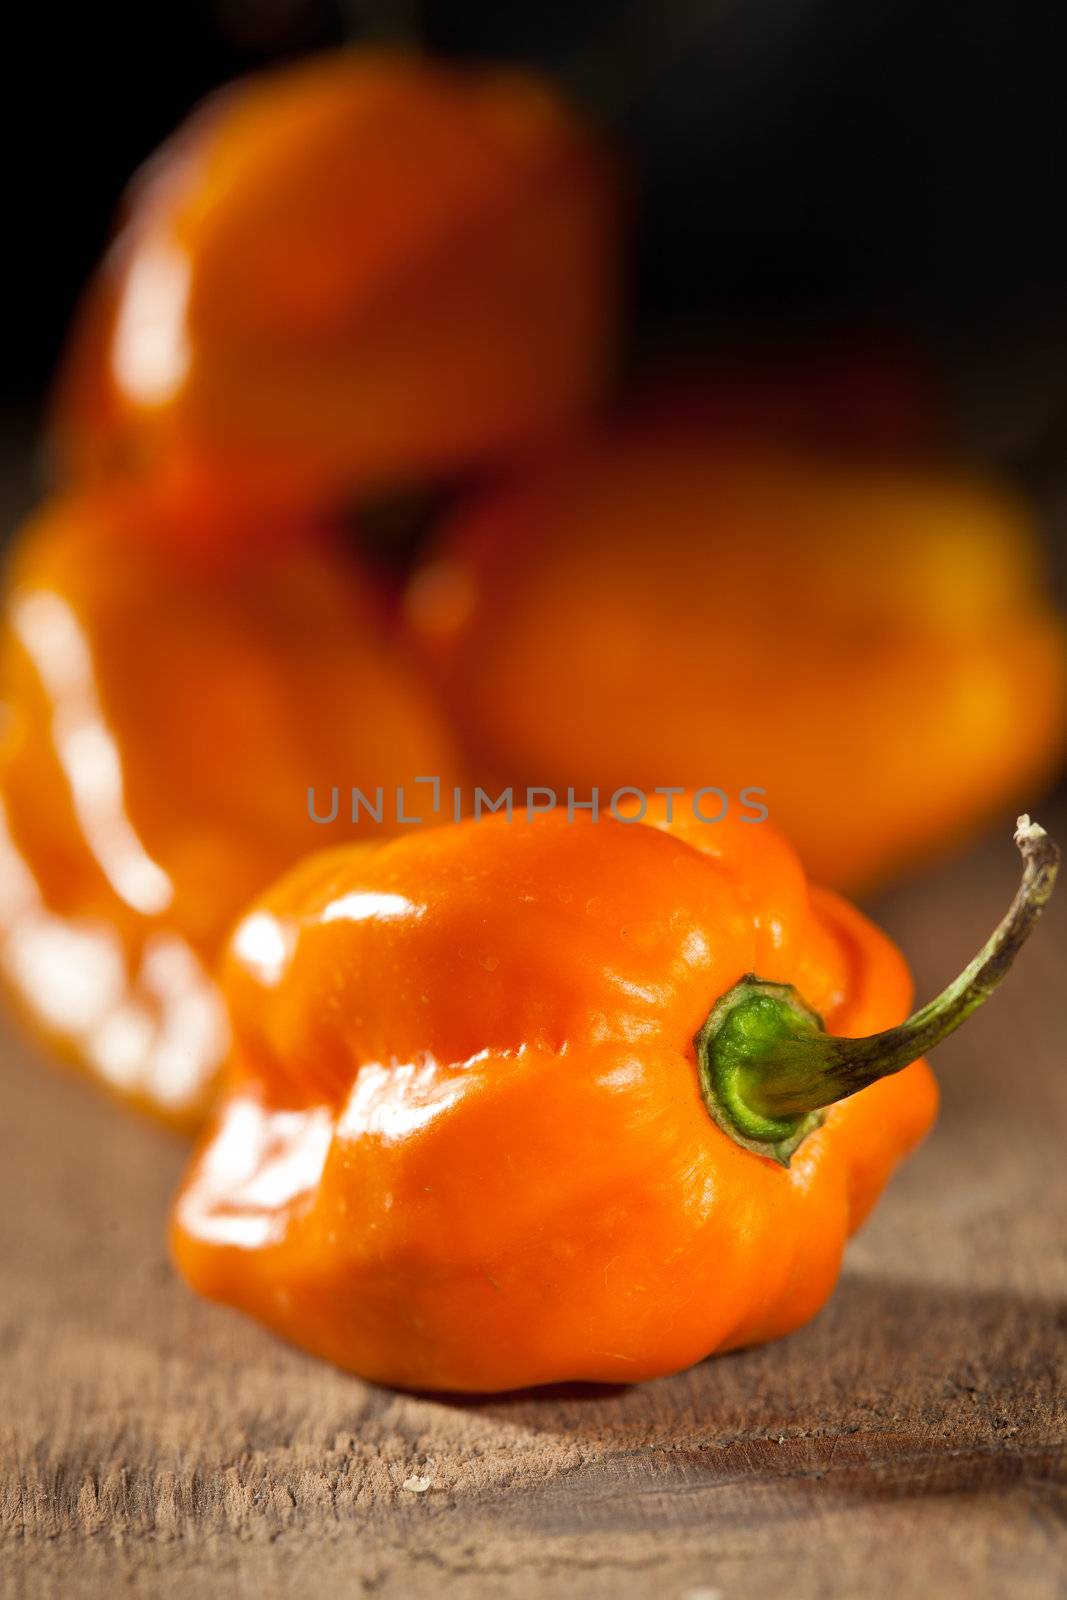 Hot pepper by Fotosmurf